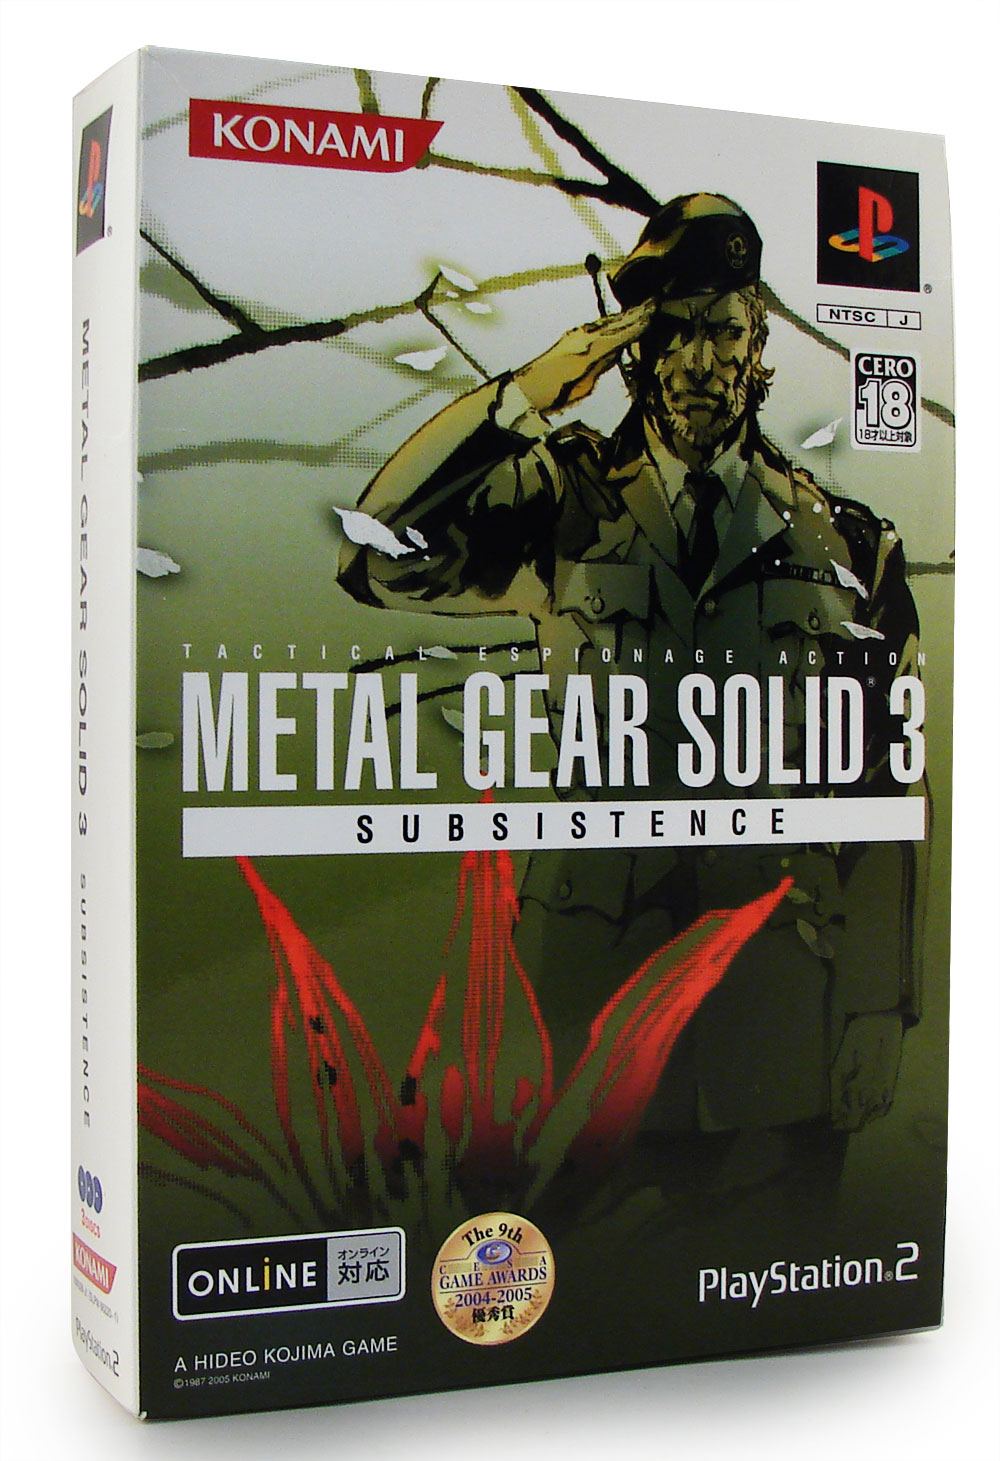 Metal Gear Solid 3 Snake Eater - PlayStation 2